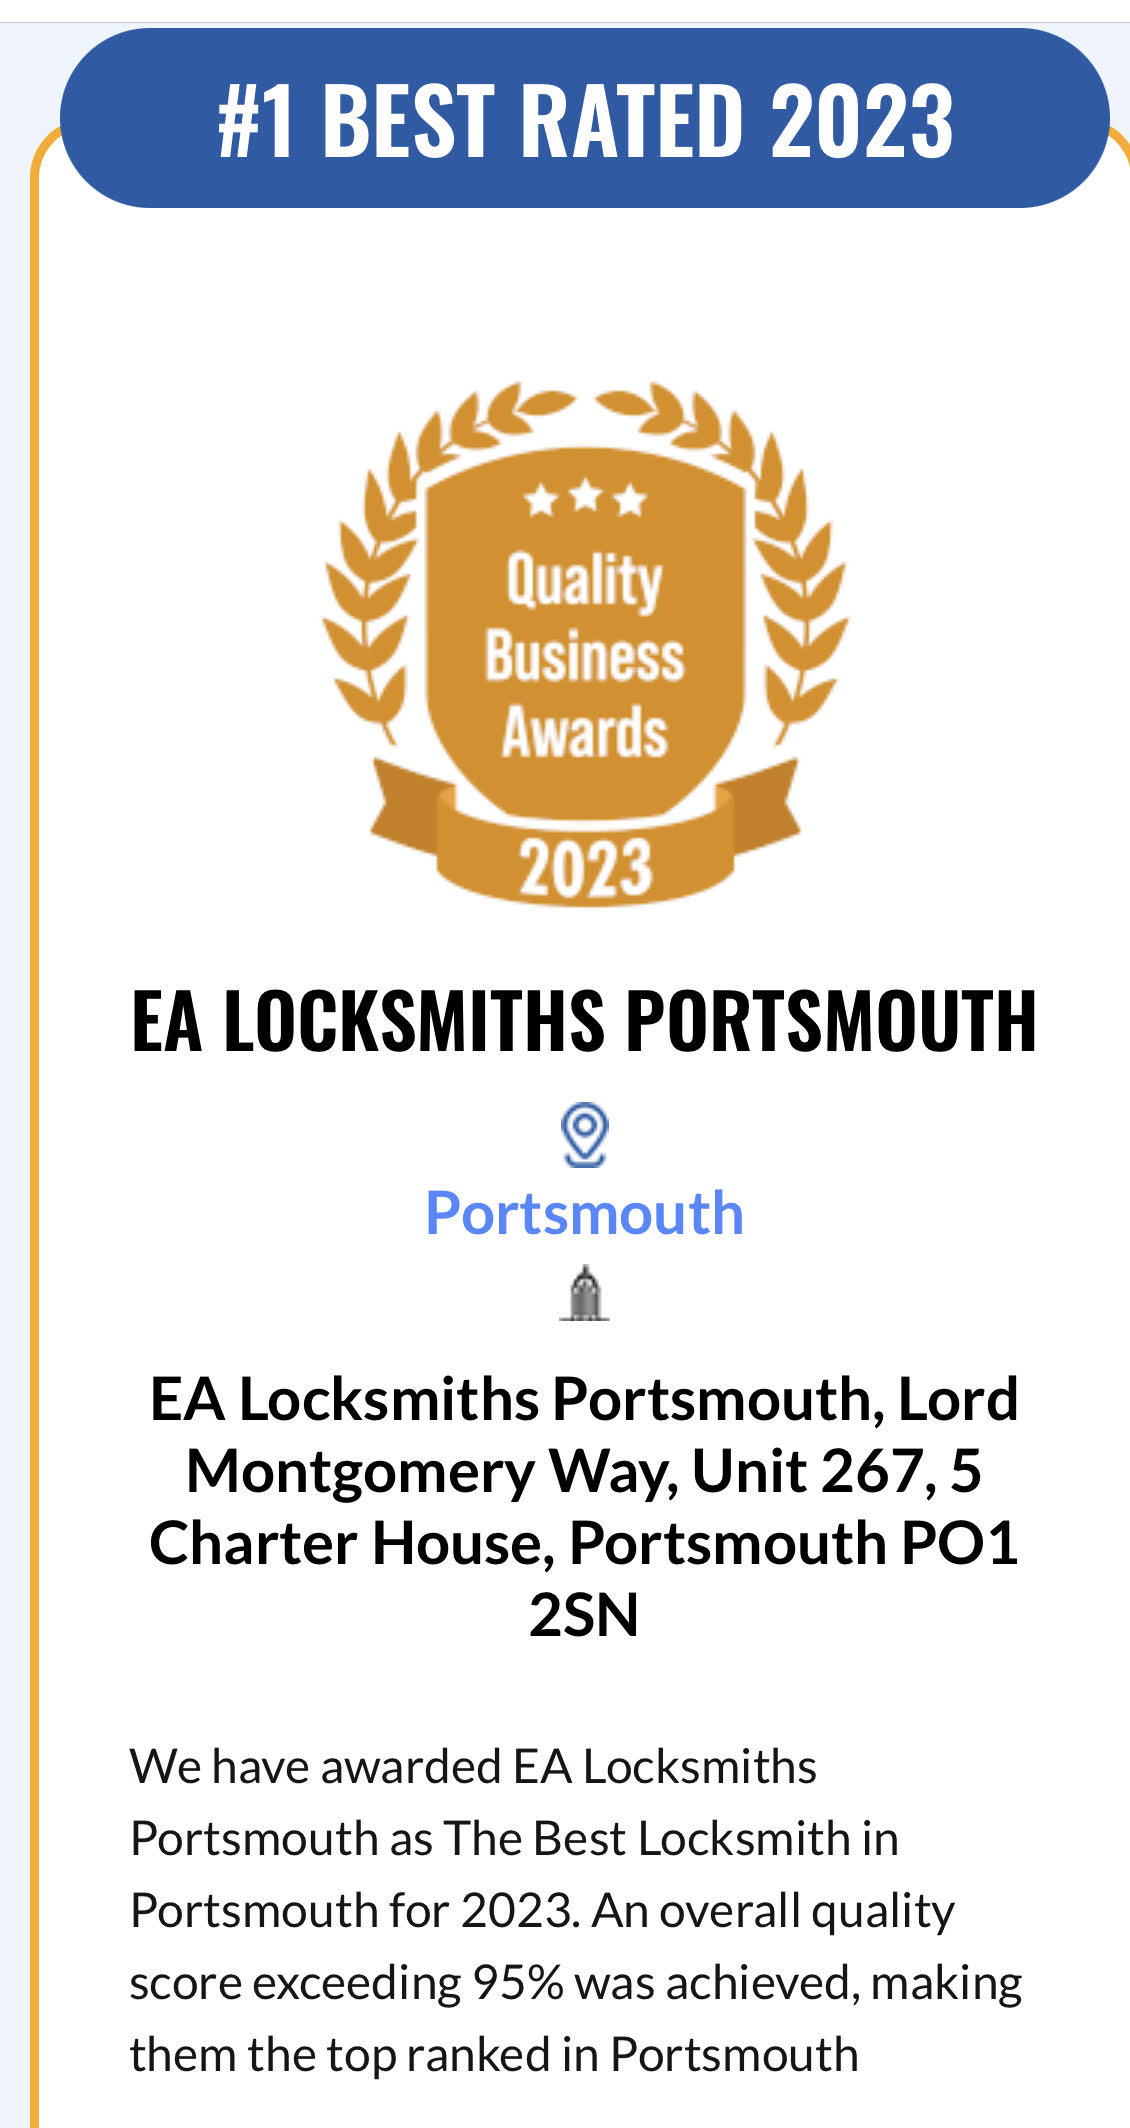 Eddie at EA Locksmiths receives number 1 best rated locksmith status